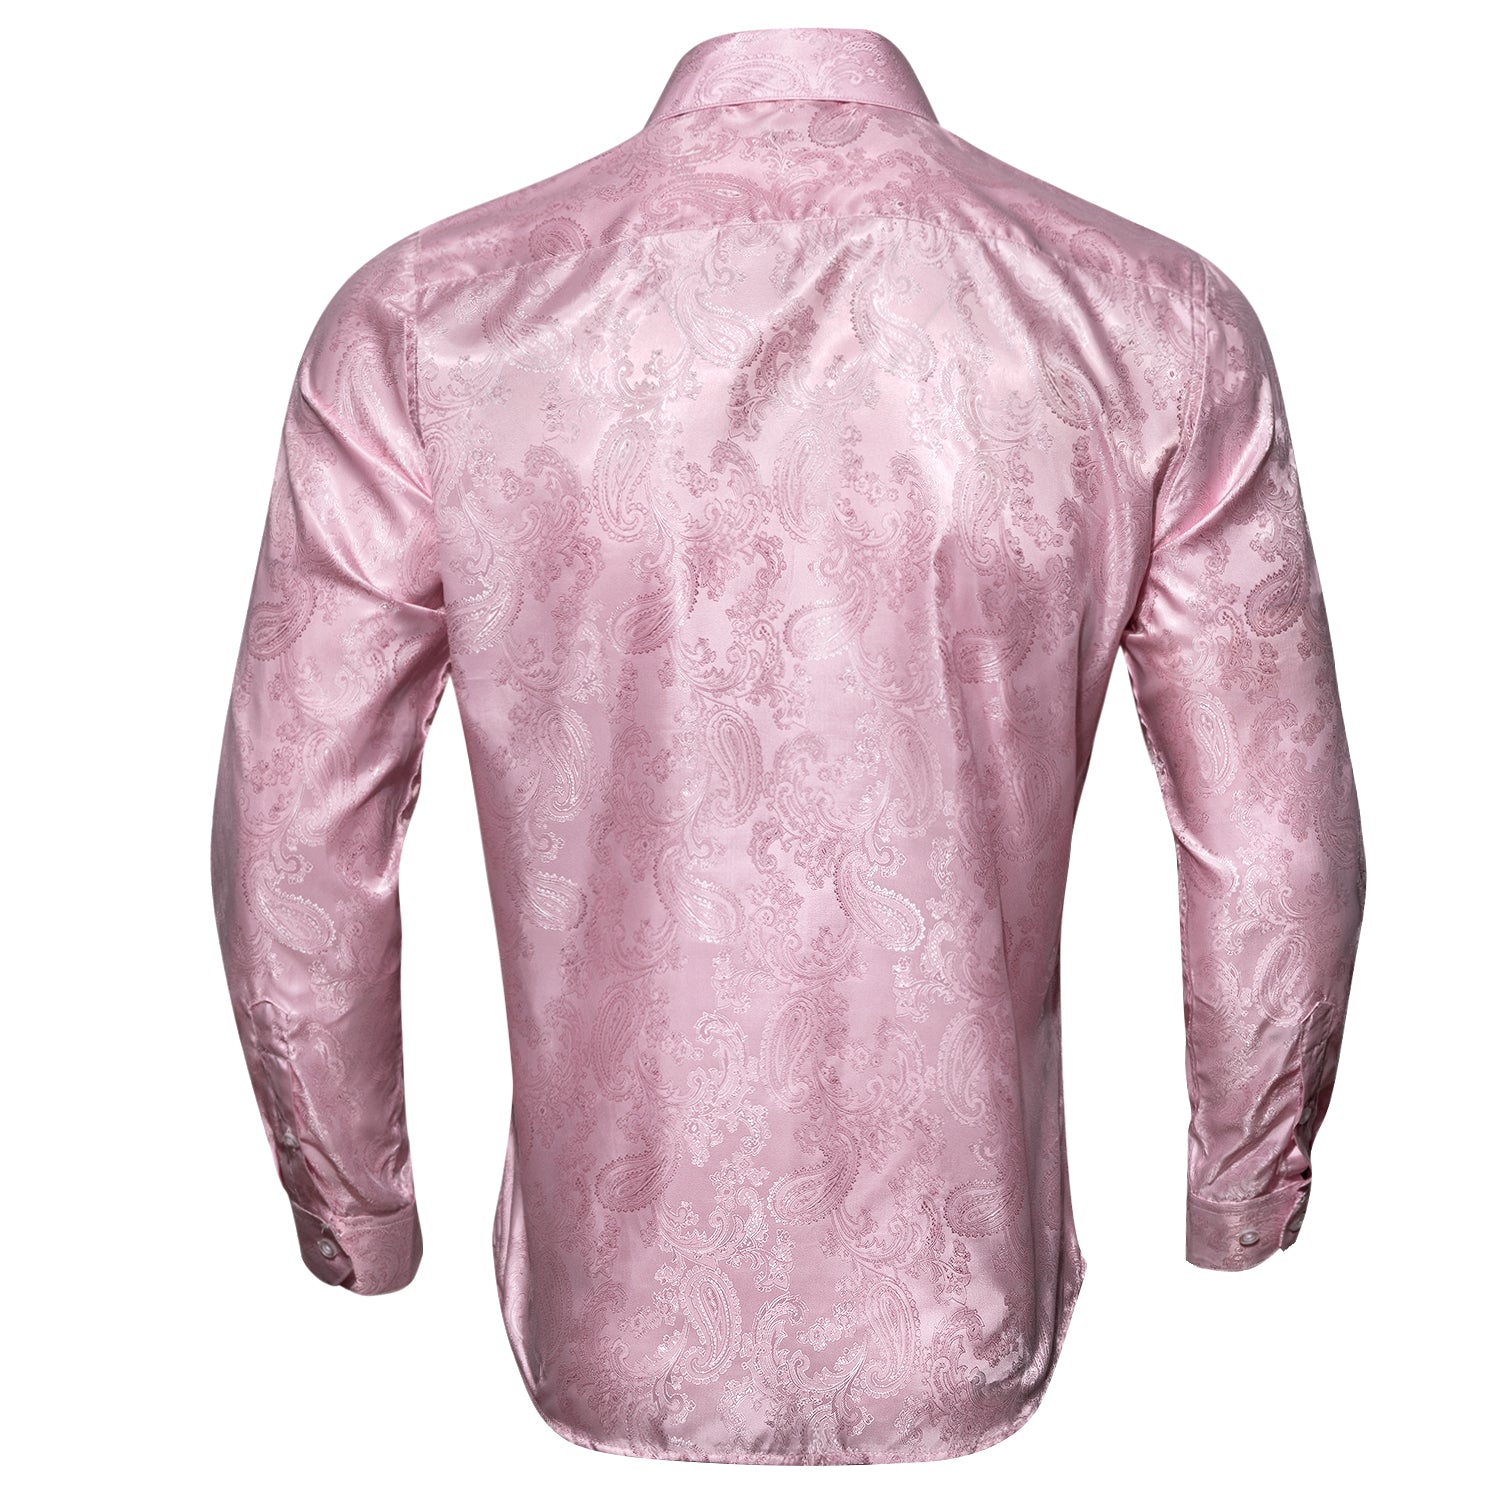 Barry Wang Button Down Shirt Pink Paisley Men's Long Sleeves Silk Shirt Fashion